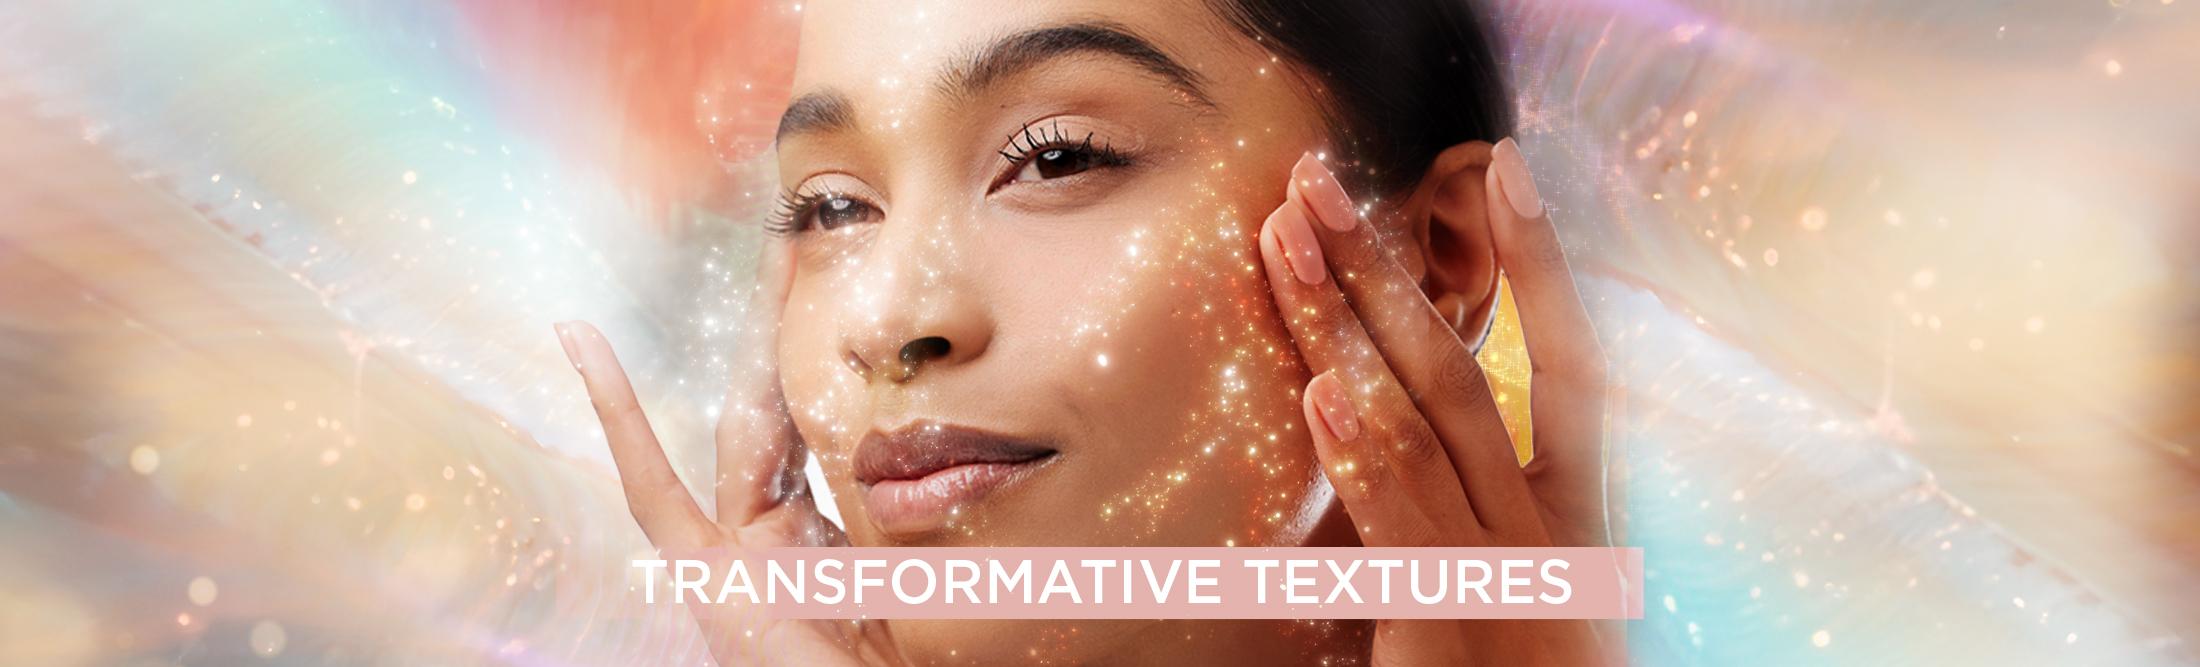 Transformative Textures